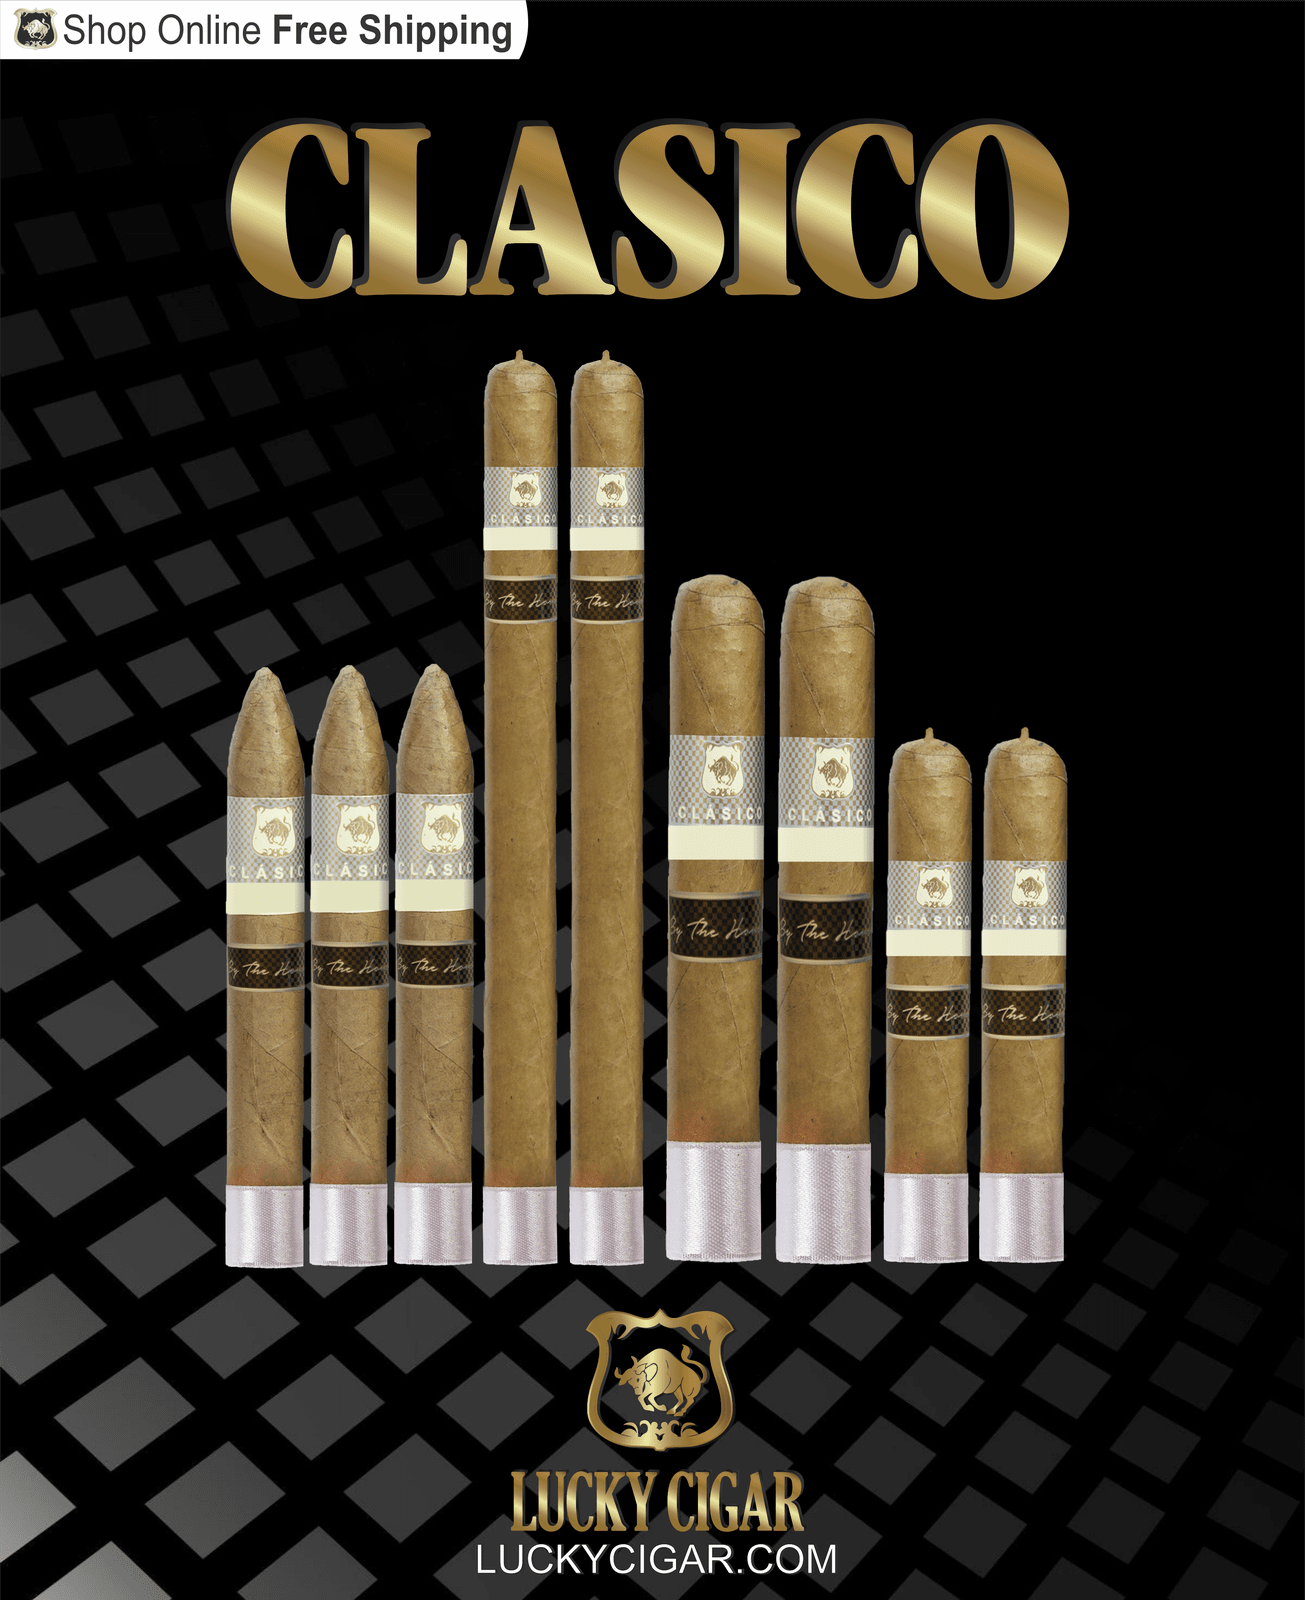 Lucky Cigar Sampler Sets: Set of 9 Classico Cigars, Churchill, Toro, Torpedo, Robusto 